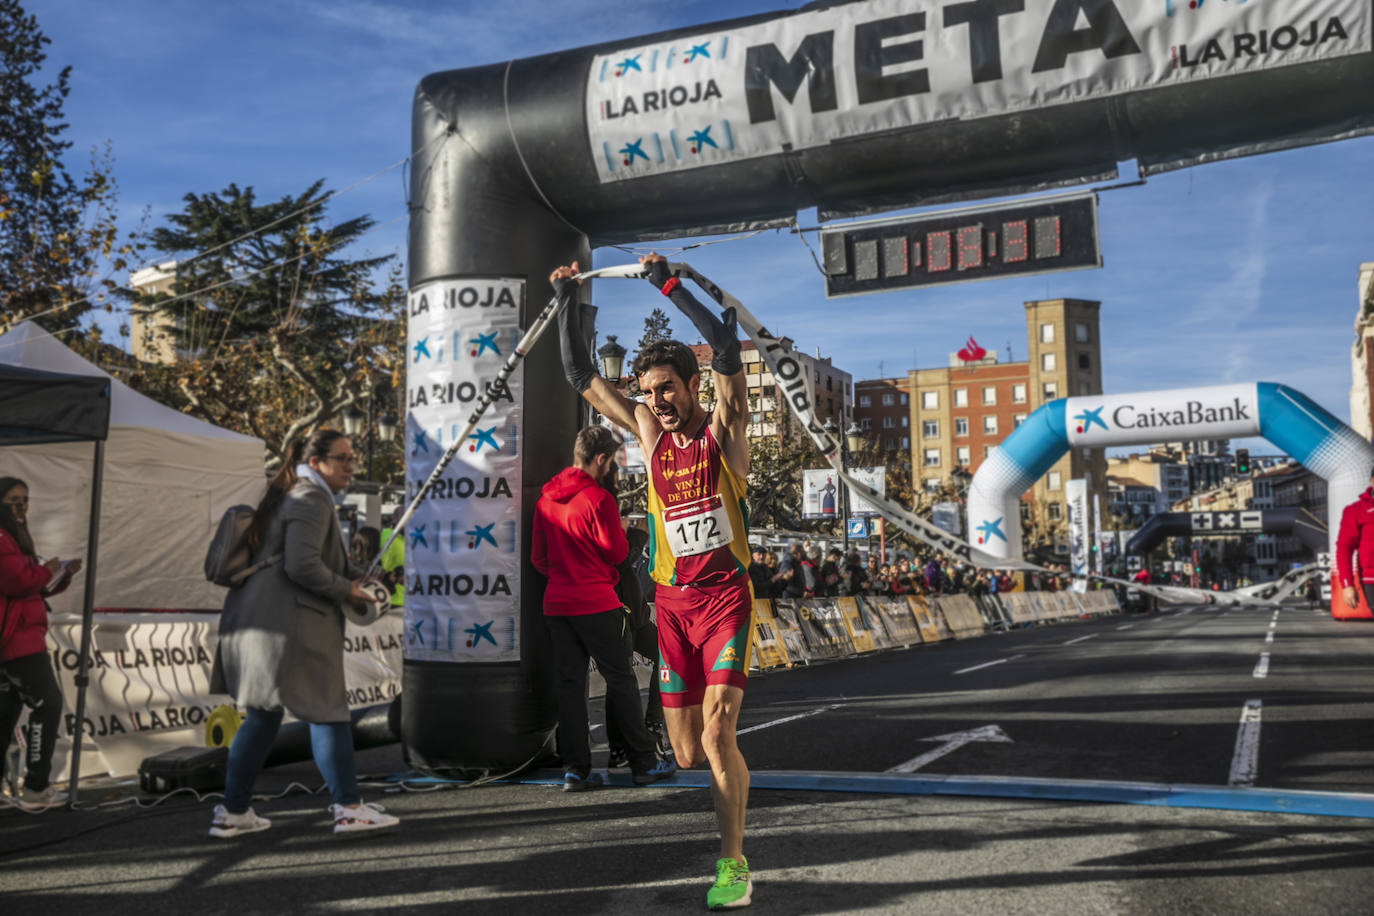 Corchete A merced de terremoto Fotos: La llegada a la meta en la Media Maratón de La Rioja | La Rioja